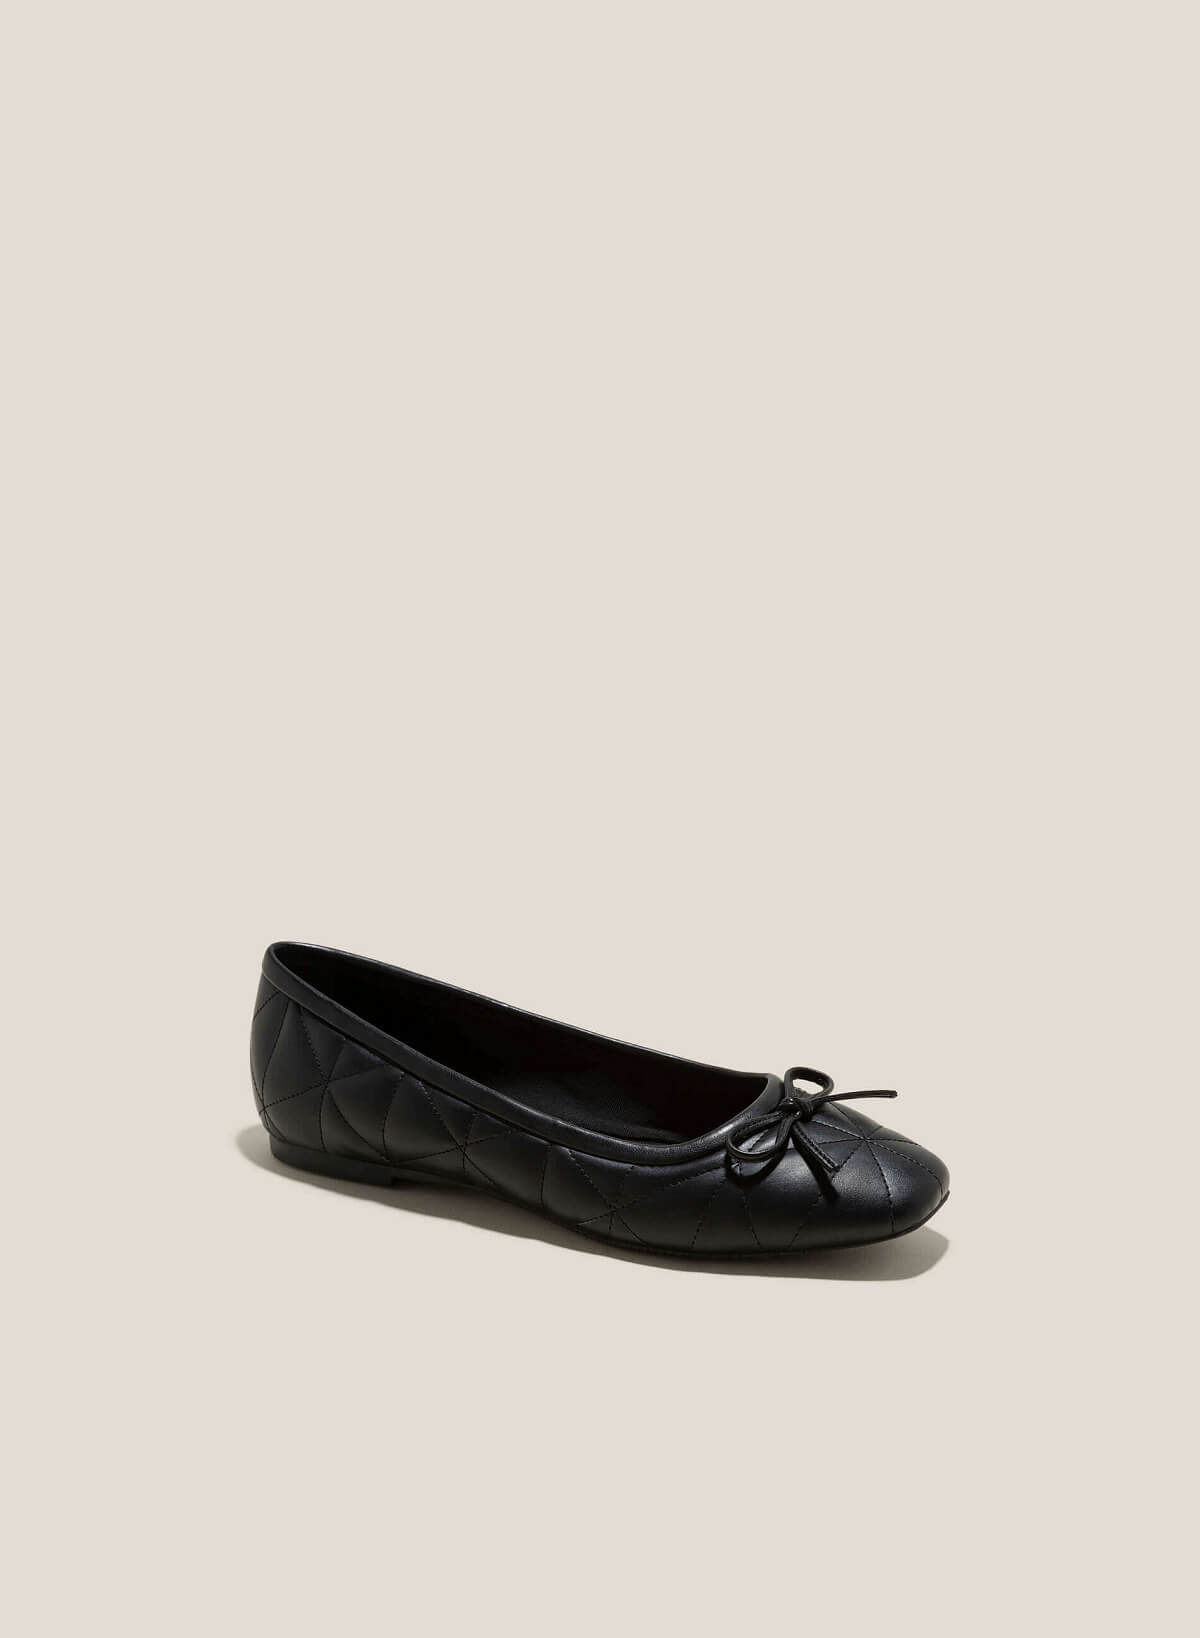 Bow Tie Quilted Ballerinas - SLI 0429 - Black | VASCARA